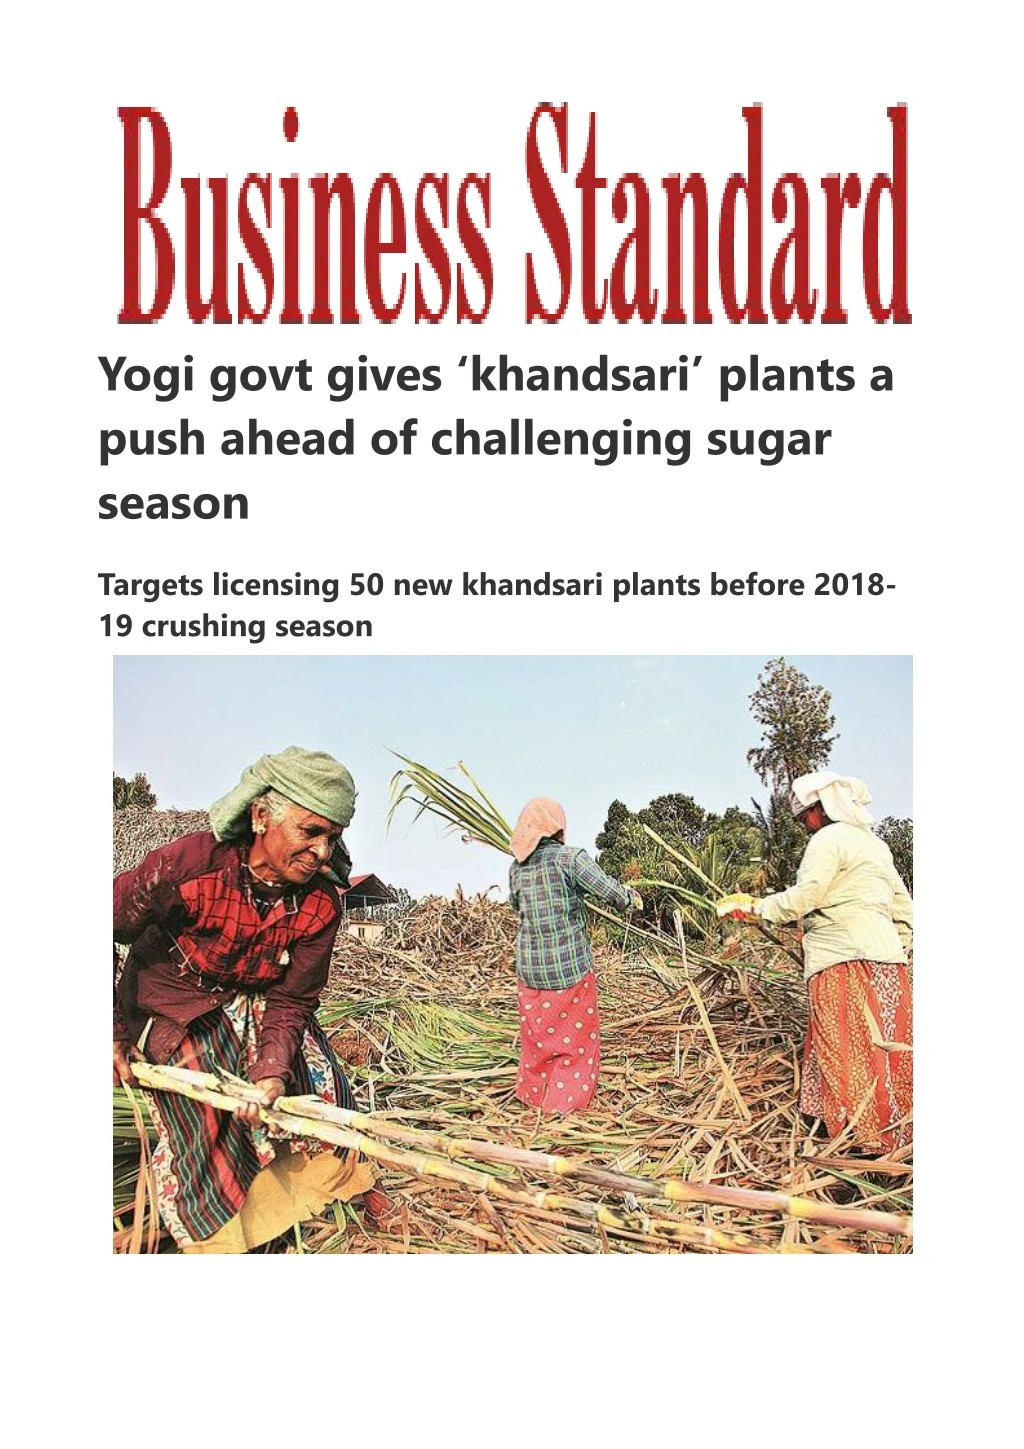 yogi govt gives khandsari plants a push ahead